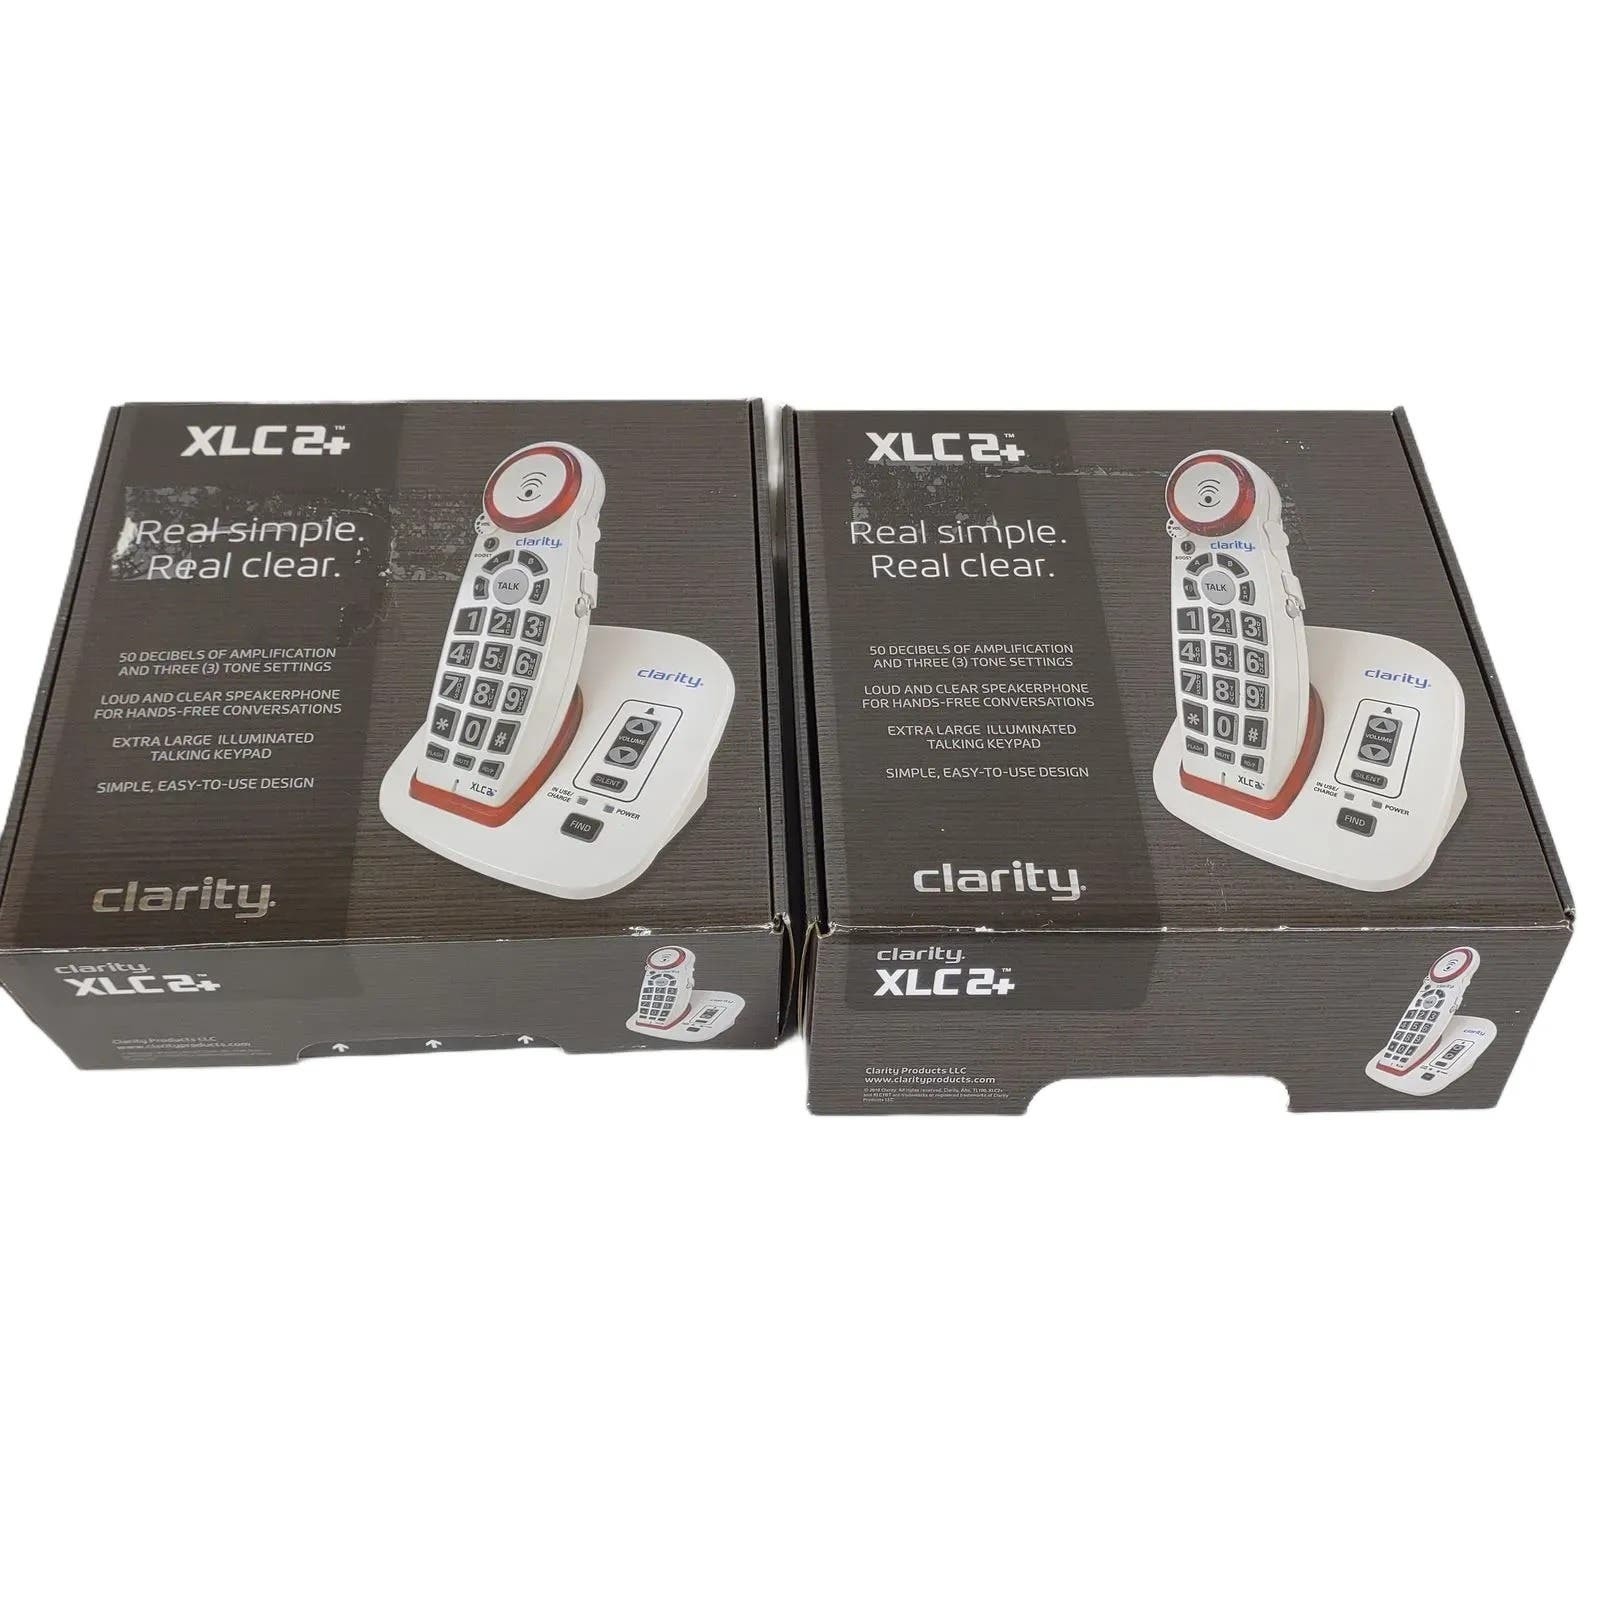 2x Clarity XLC2+ Cordless Speaker Phone Amplified Big Button Flashing Telephones - $53.22